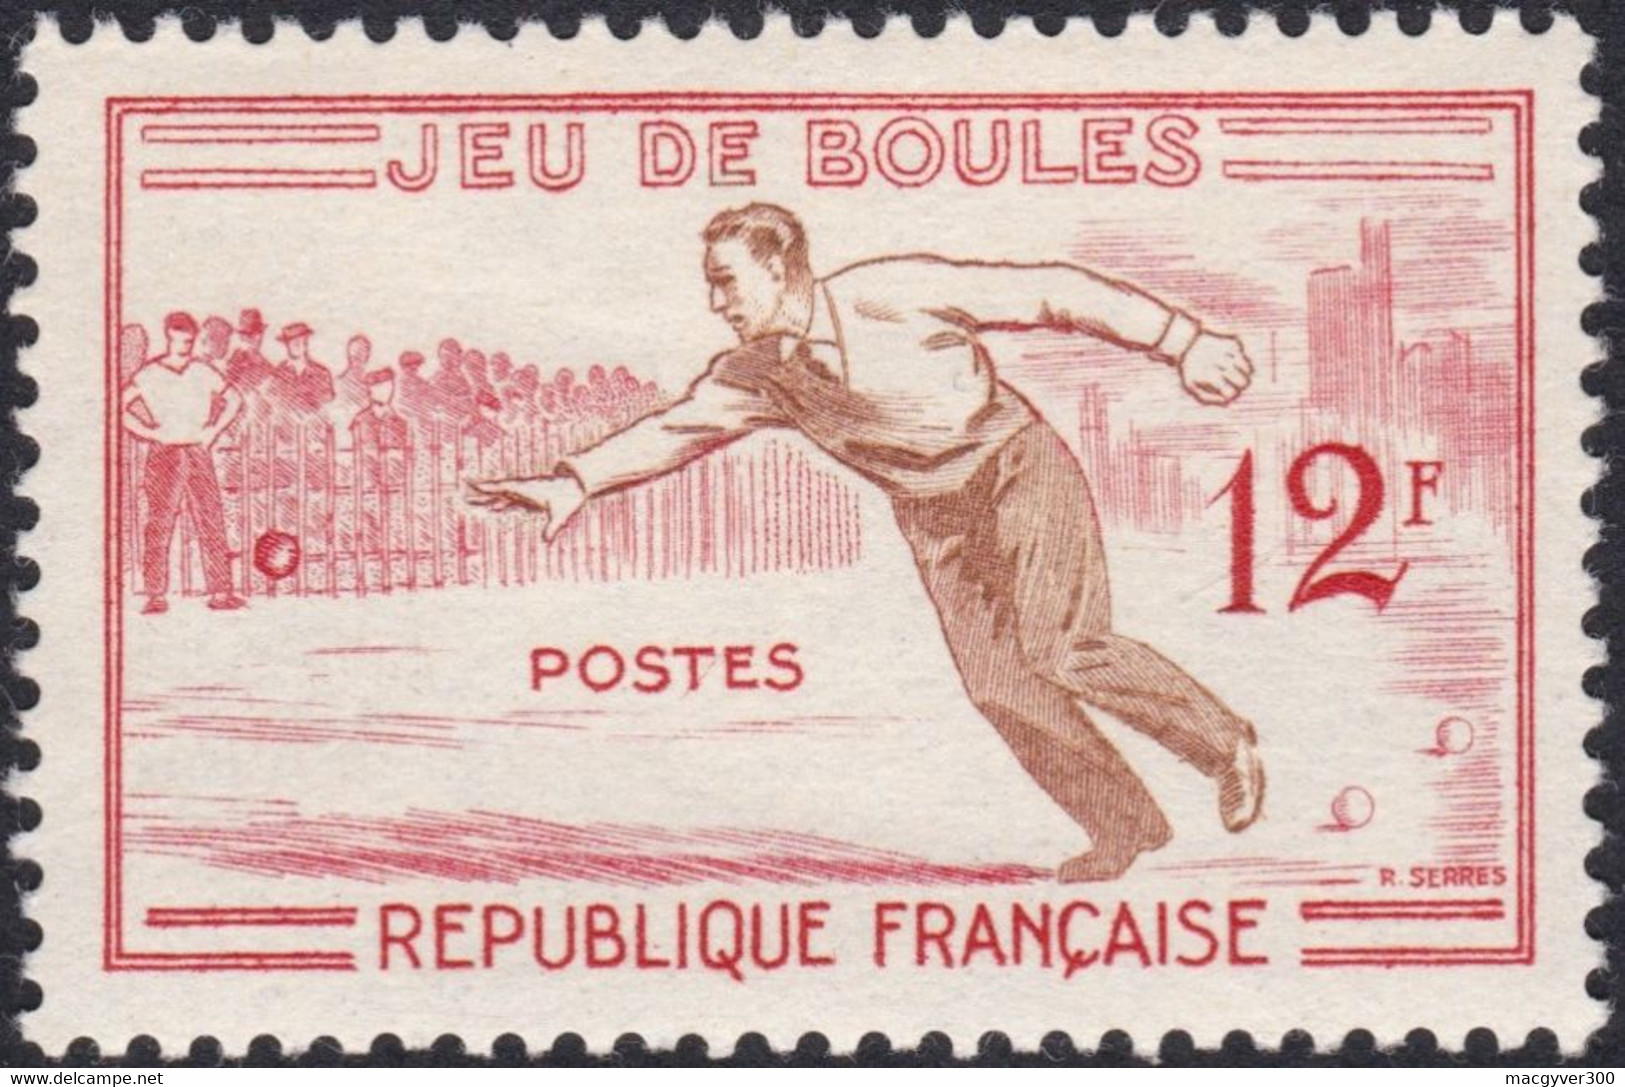 FRANCE, 1958, Jeu De Boules, Sport ( Yvert 1161 ) - Petanque